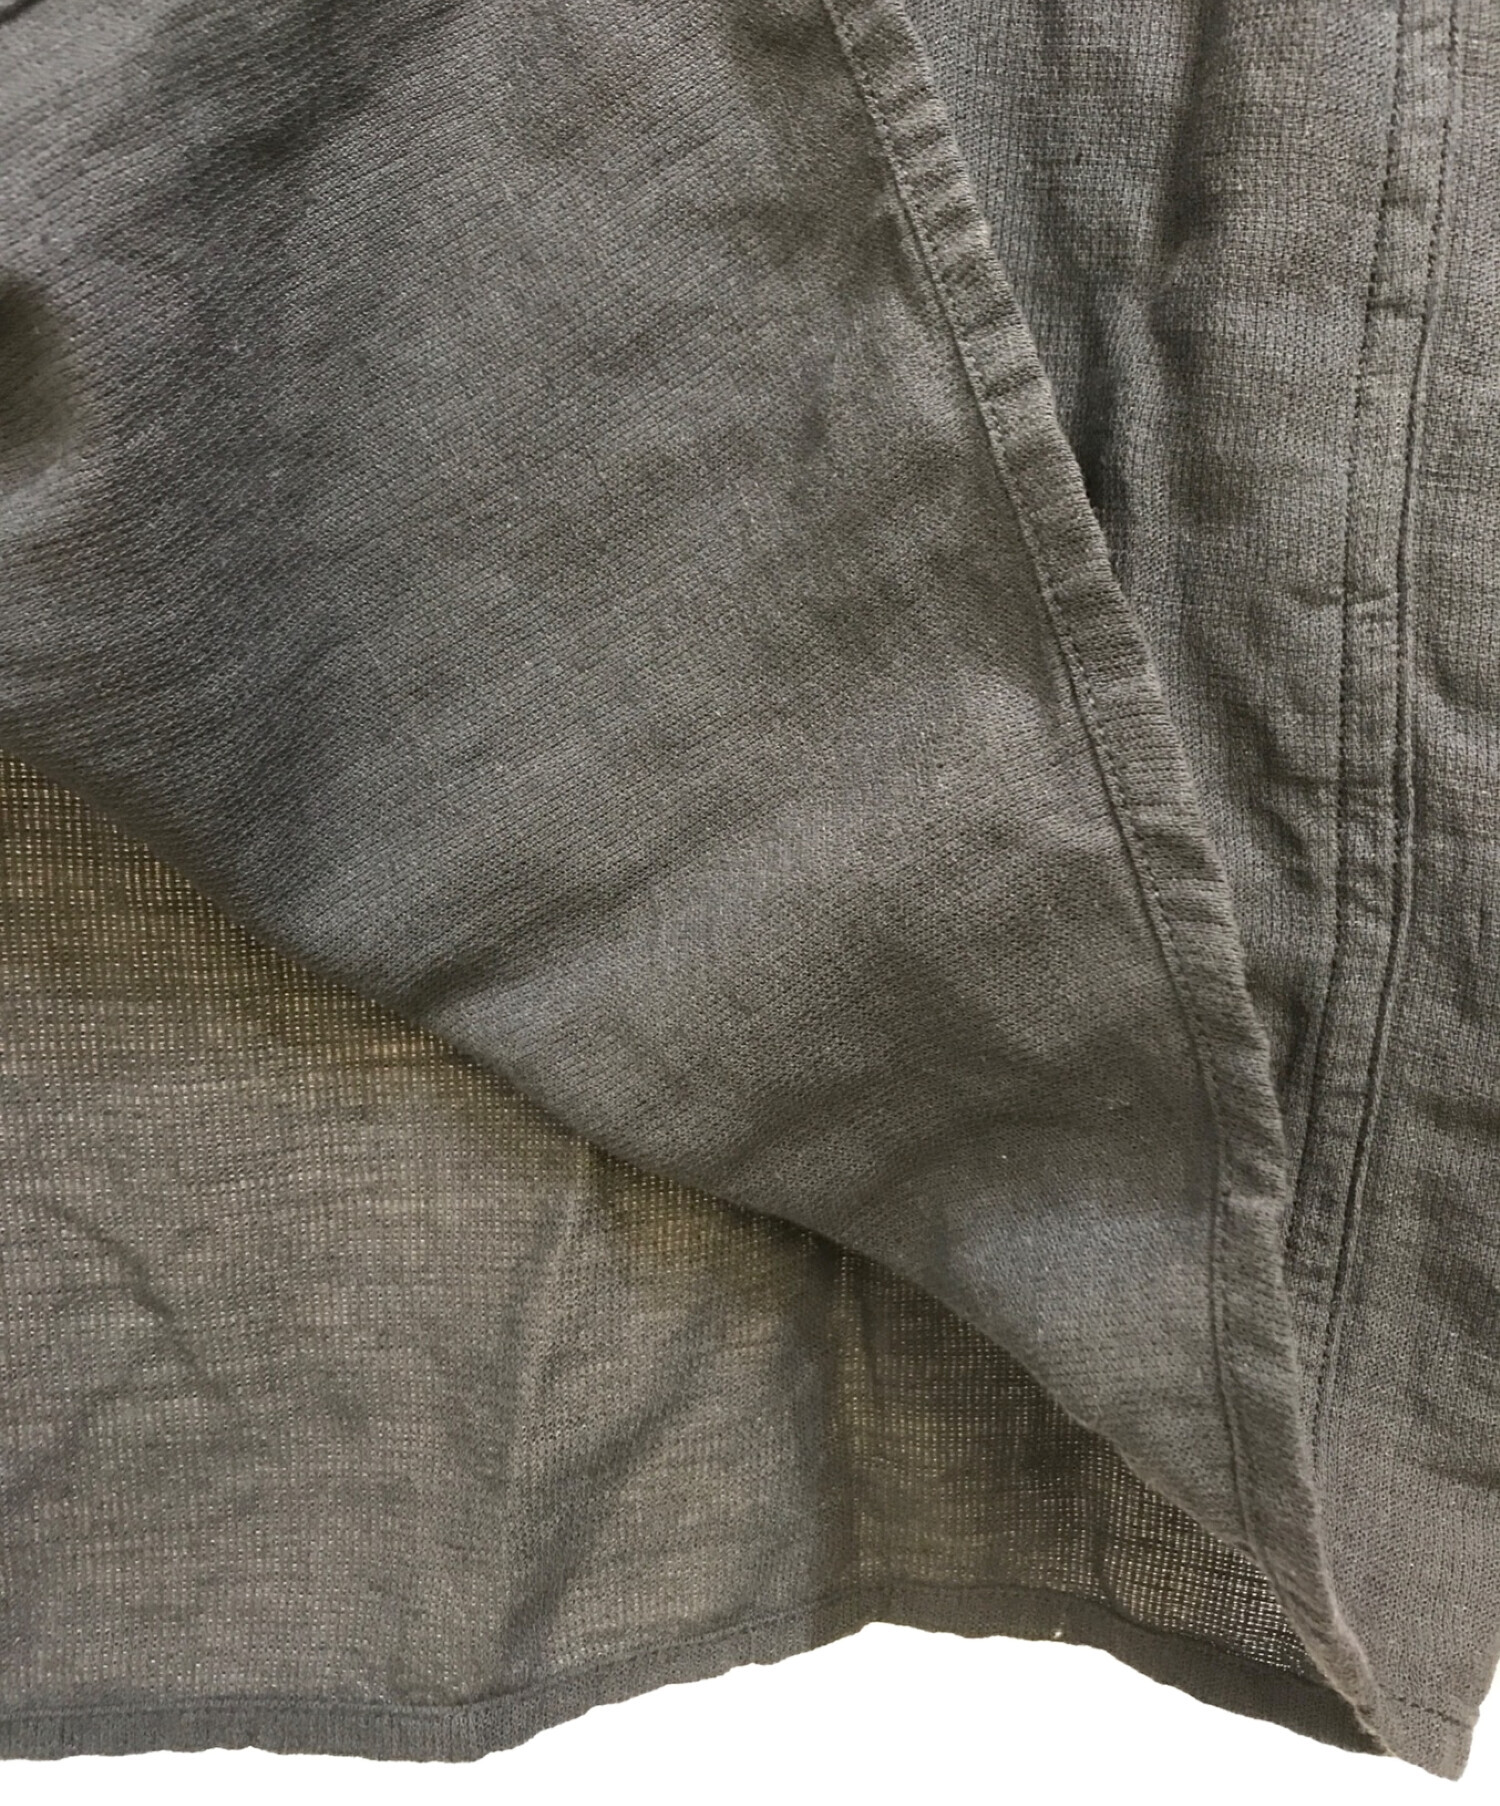 KAPTAIN SUNSHINE (キャプテンサンシャイン) Field Shirt Jacket ブラック サイズ:36